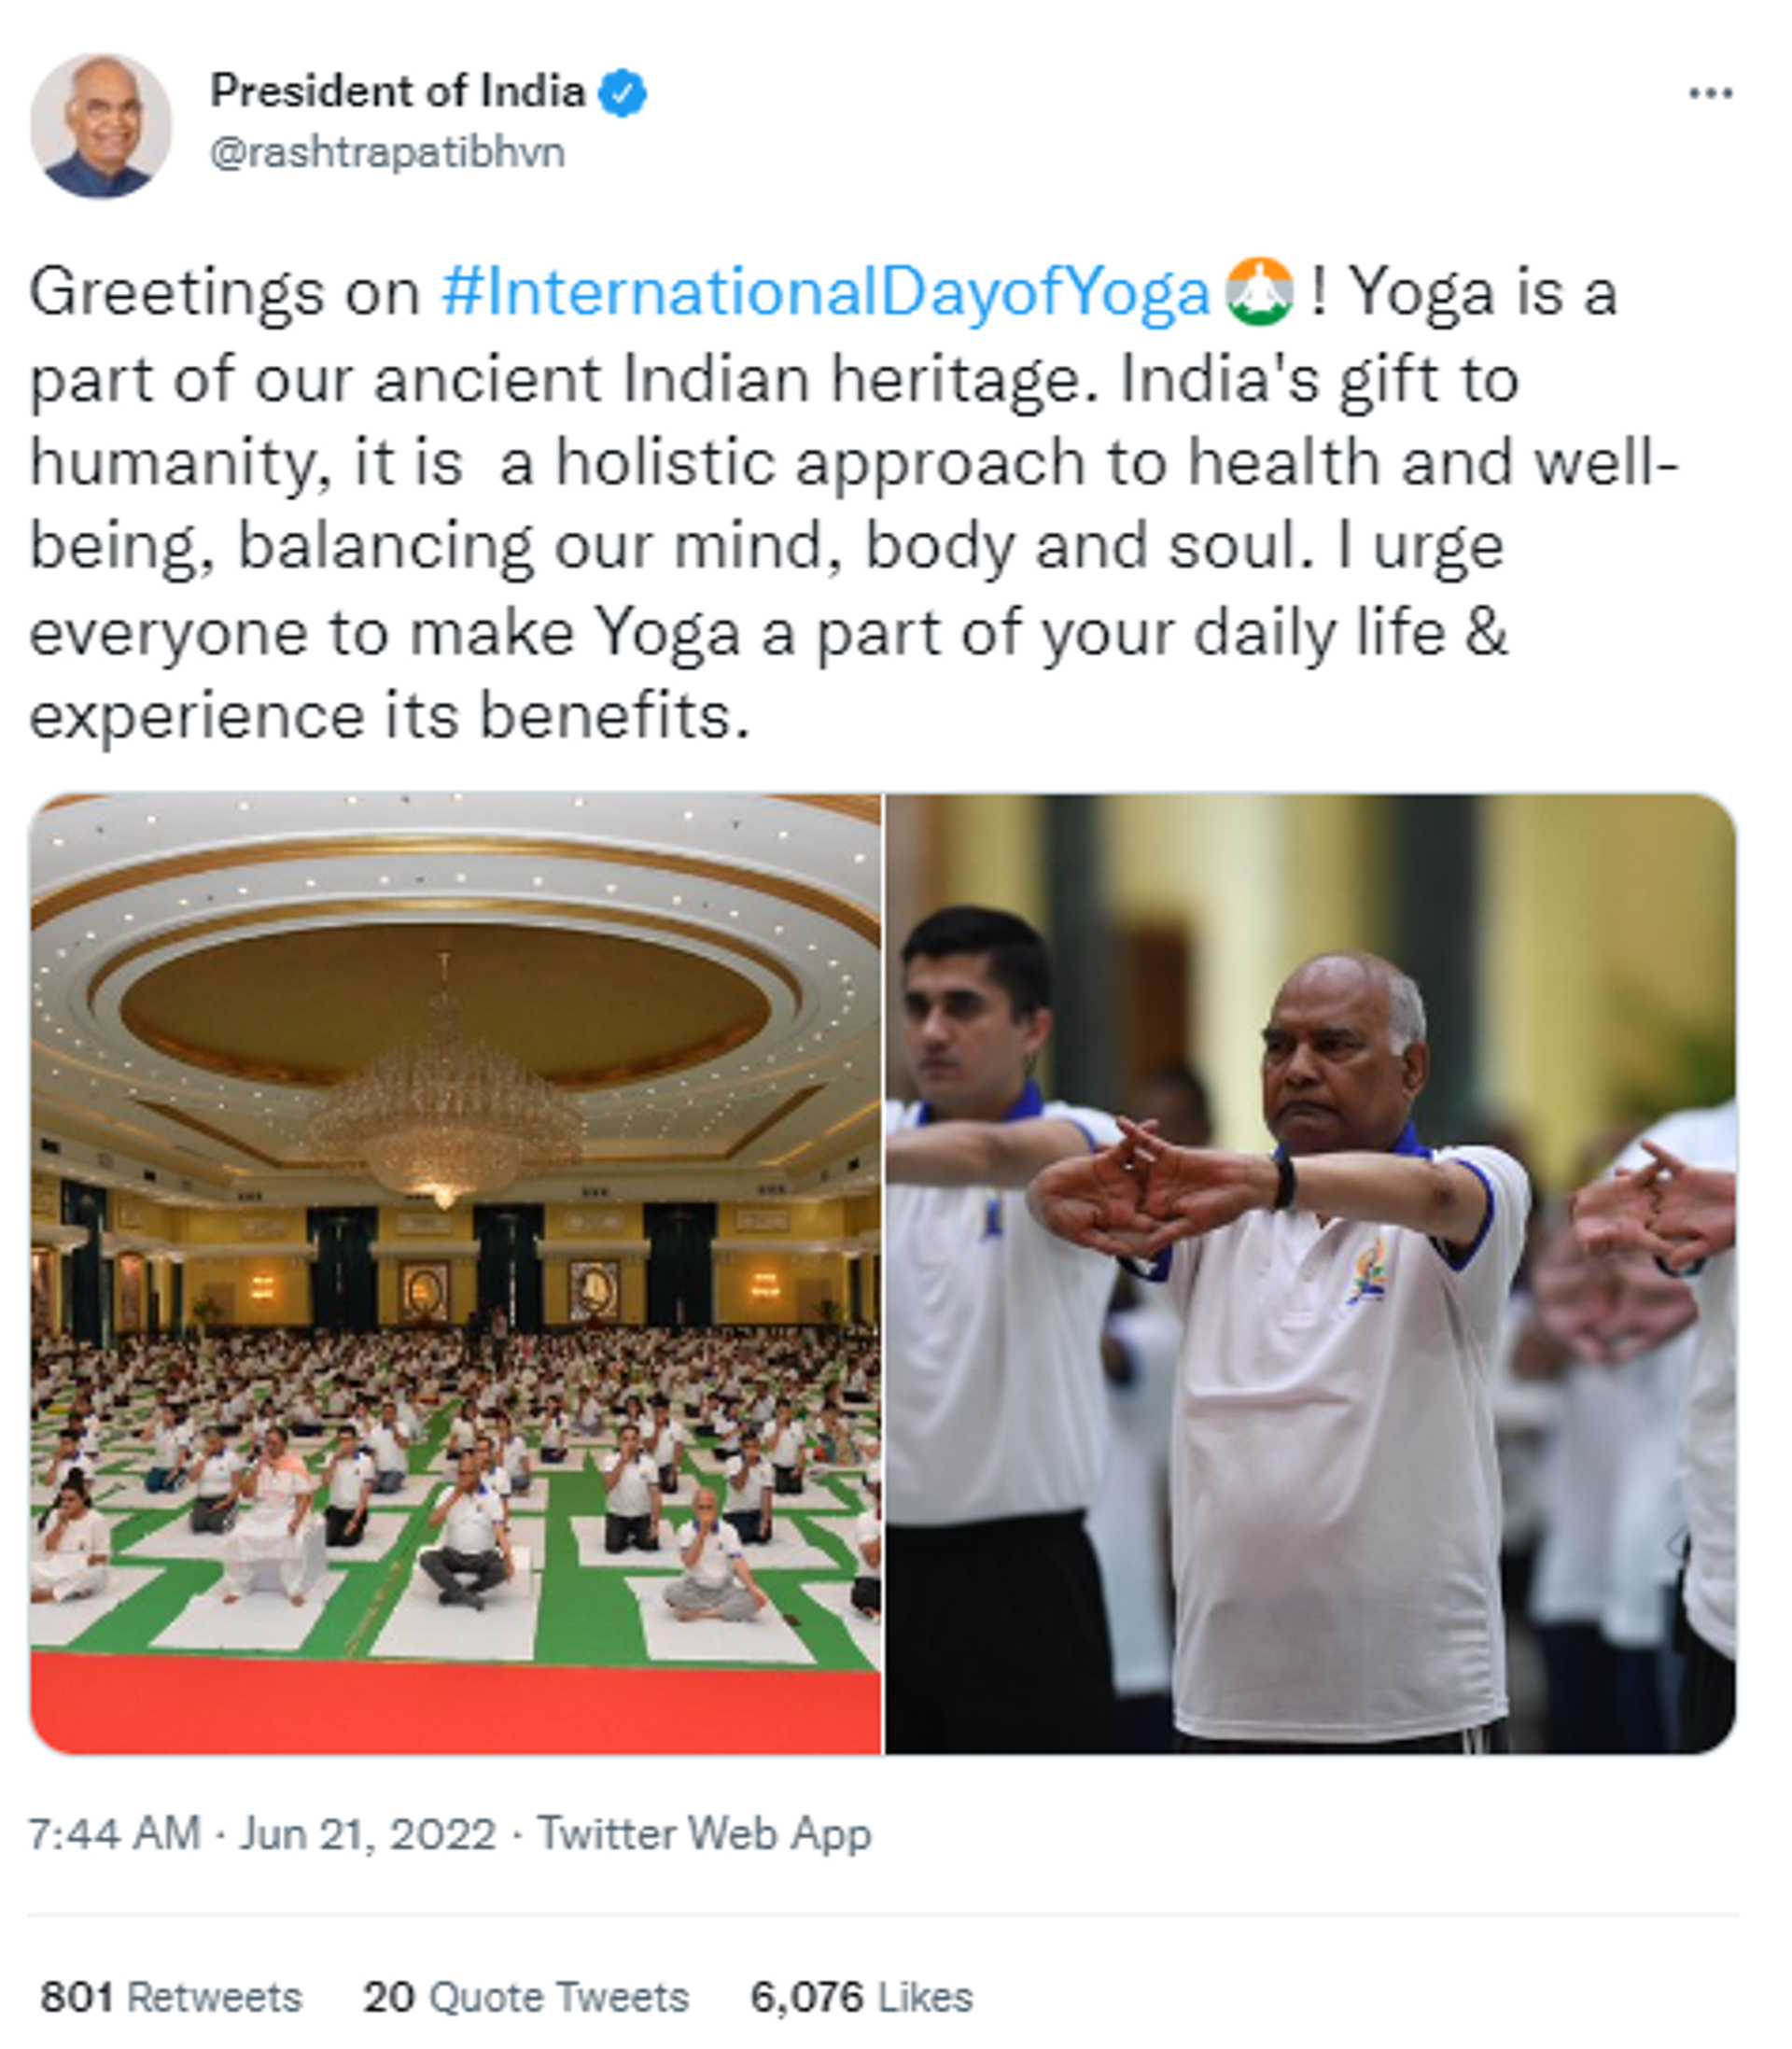 President Ram Nath Kovind Participated in Yoga Demonstration at President's House - Sputnik International, 1920, 21.06.2022